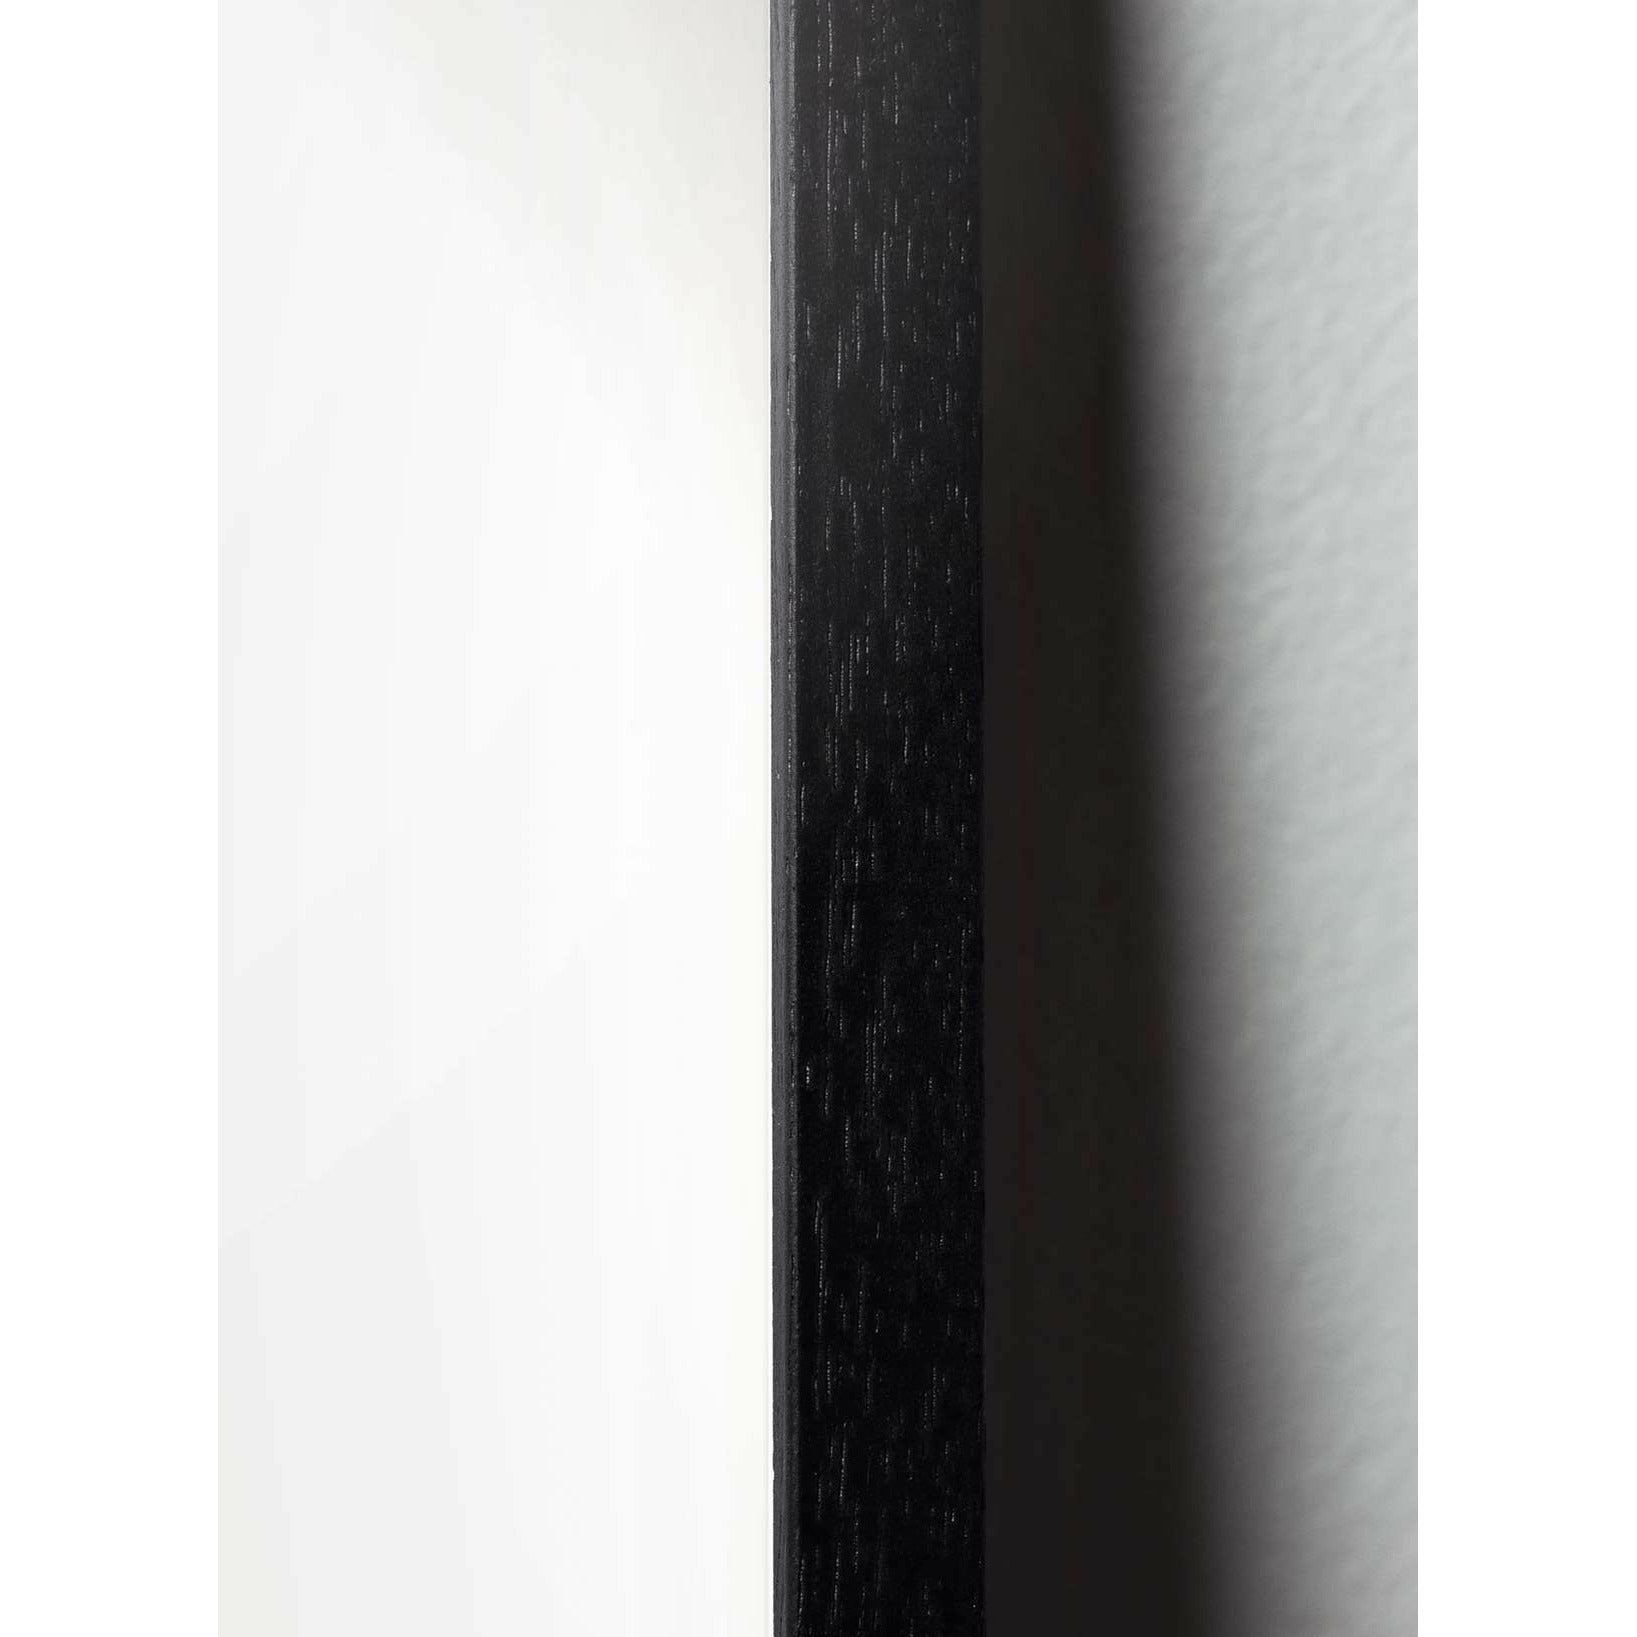 Brainchild Äggfigur Cross -Format -affisch, ram i svart -målat trä 50x70 cm, brunt